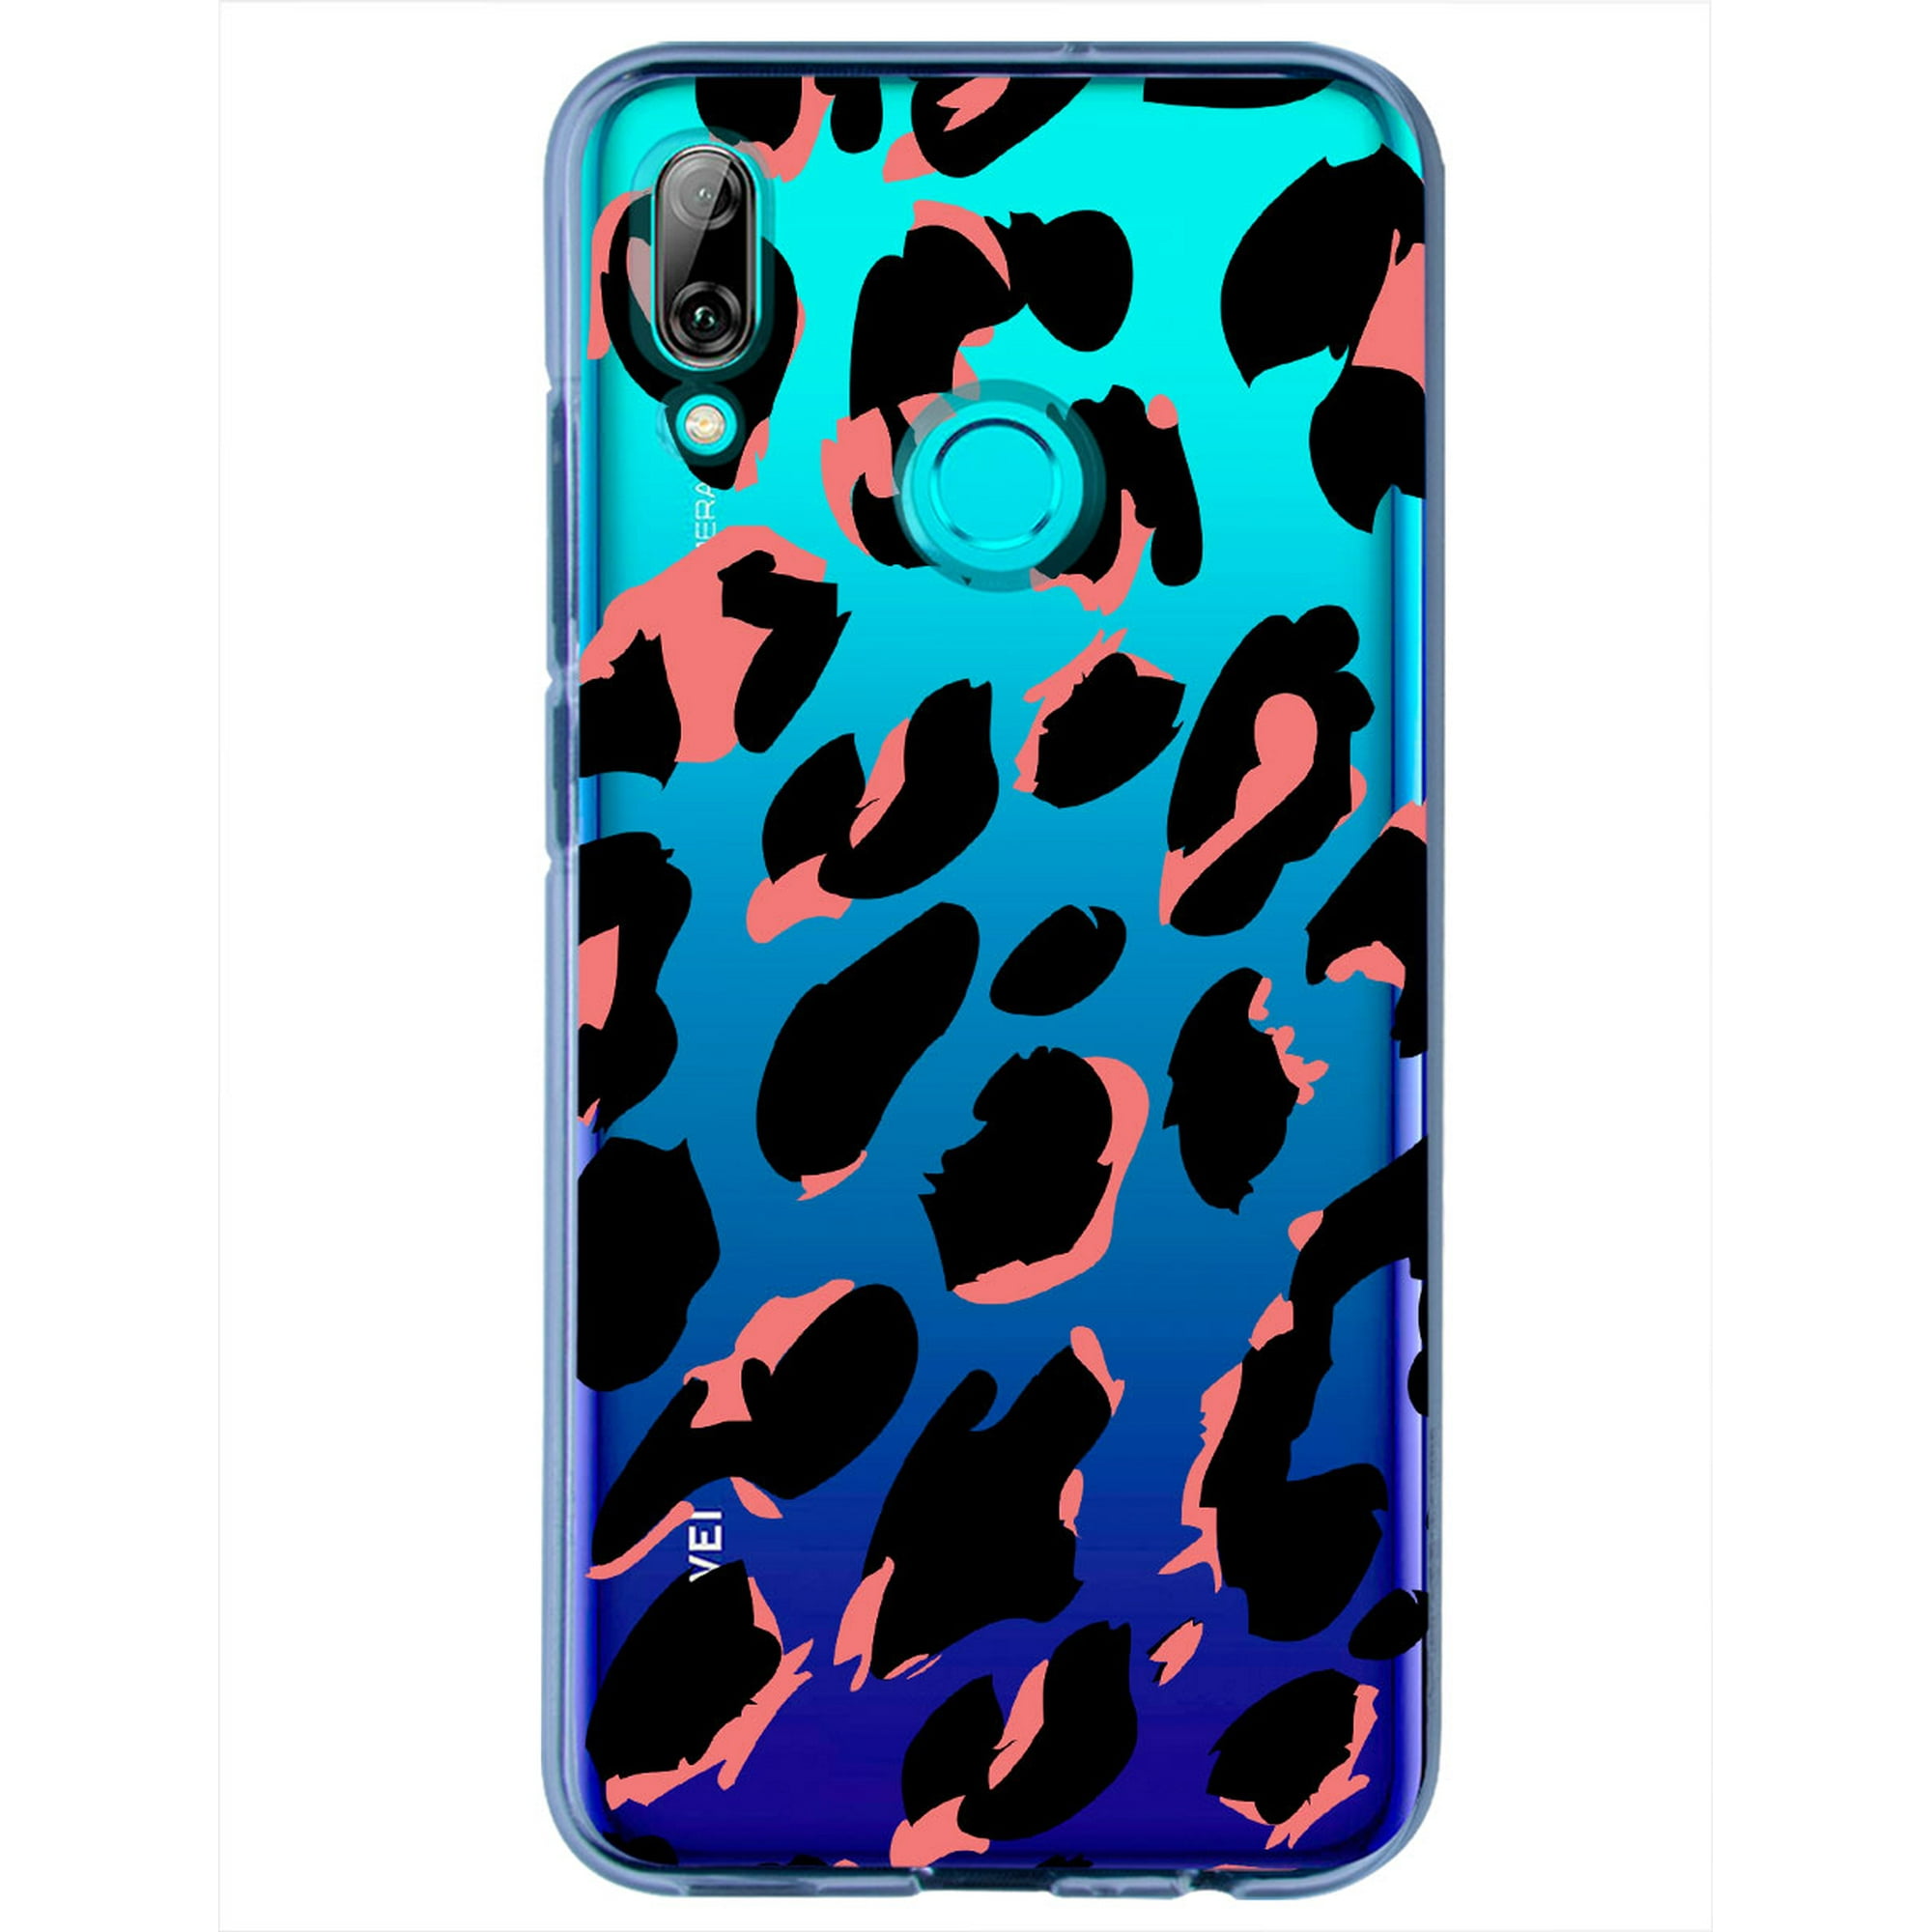 Funda para huawei p smart 2019 con diseño leopardo animal print instacase animal print collection